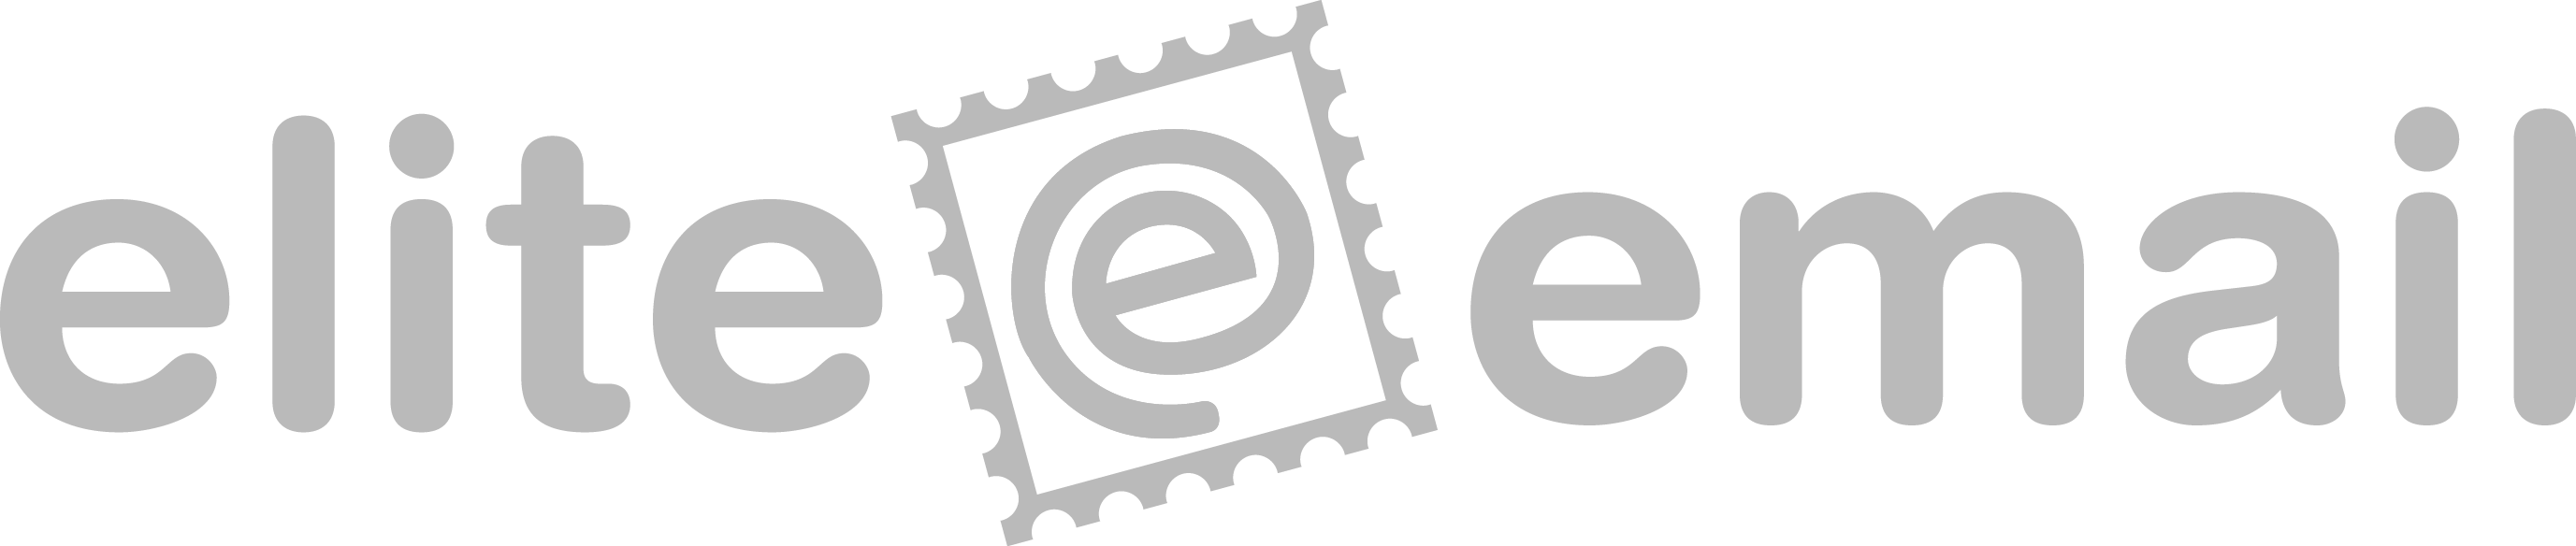 Logo footer eliteemail